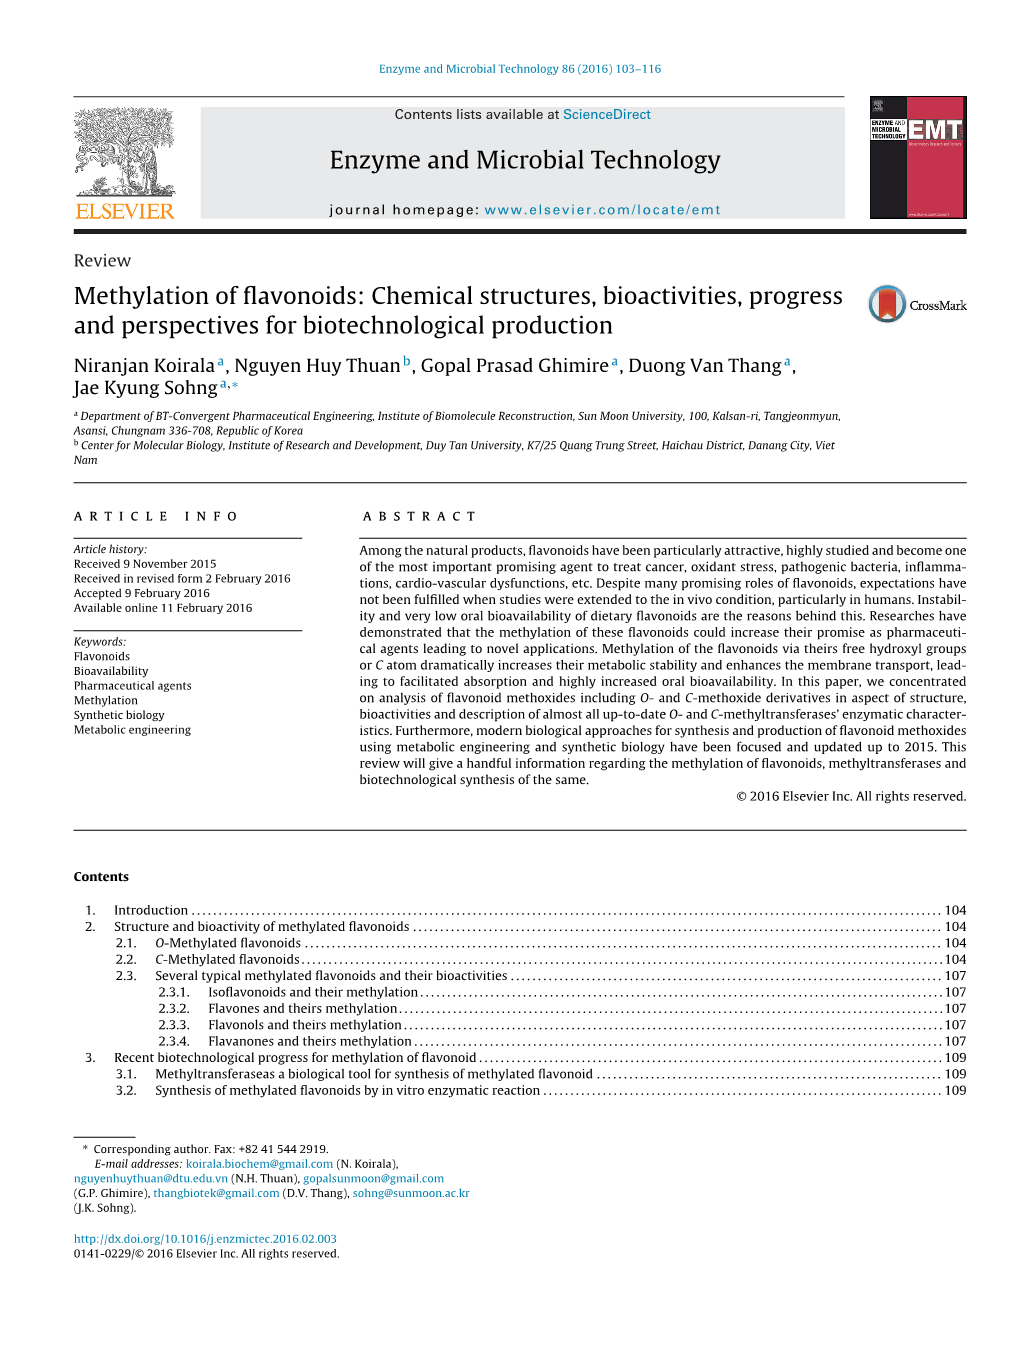 Methylation of Flavonoids: Chemical Structures, Bioactivities, Progress